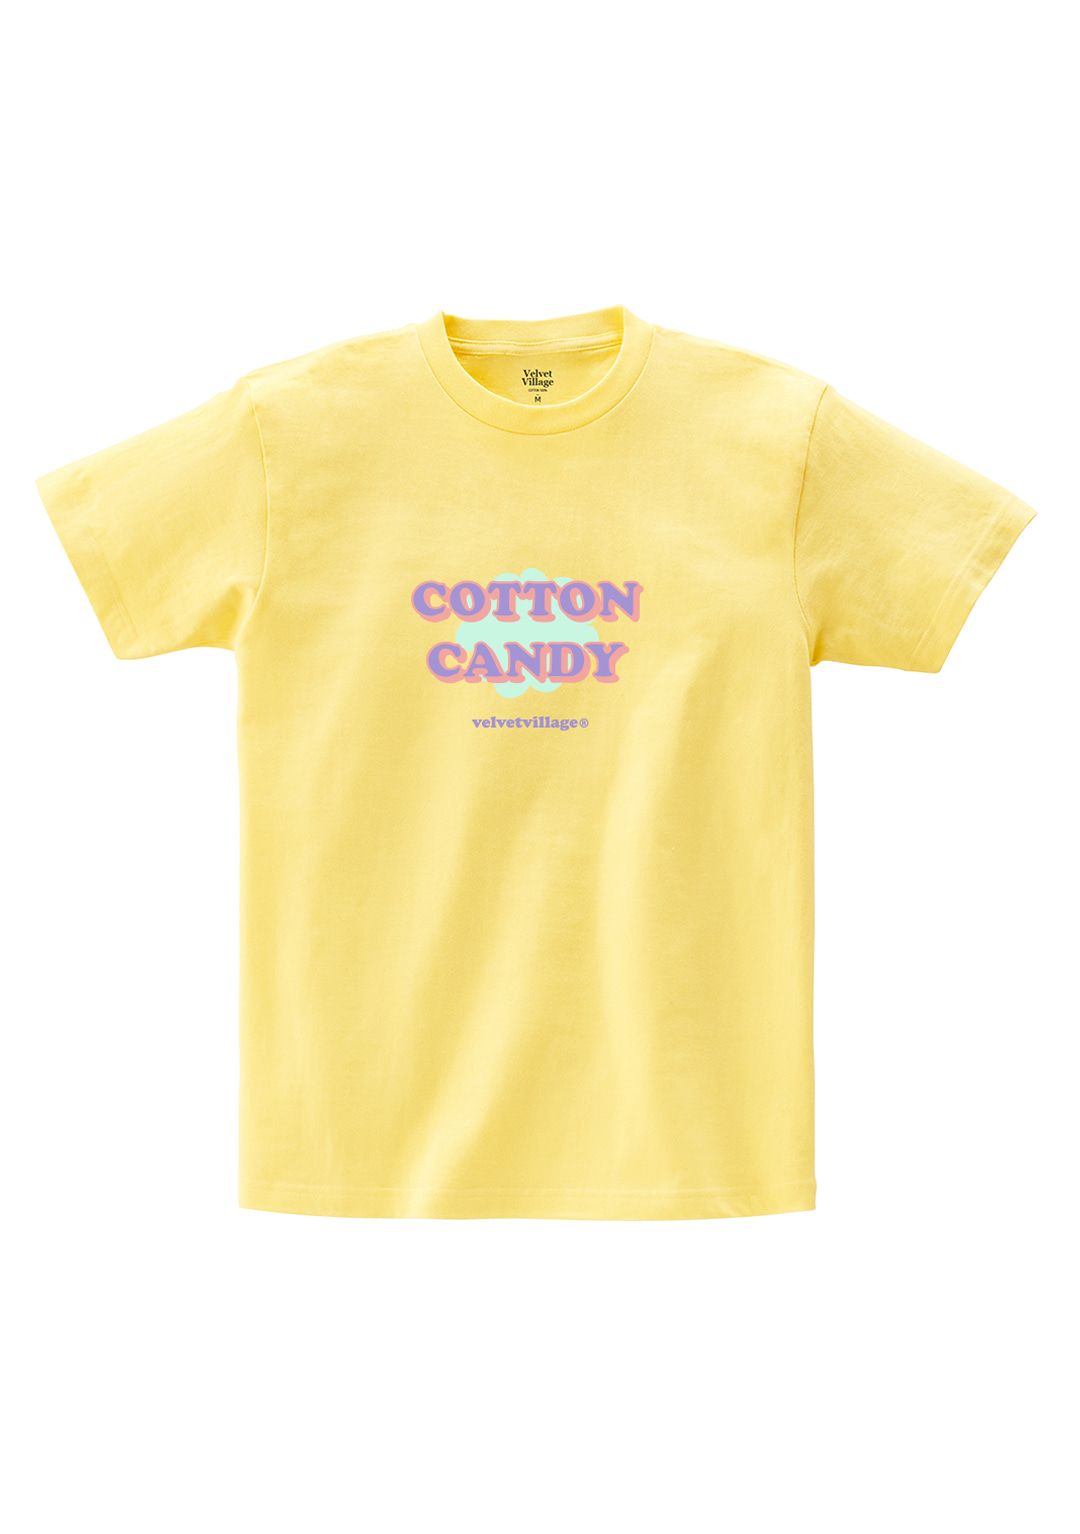 Cottoncandy T-shirt (Light Yellow)